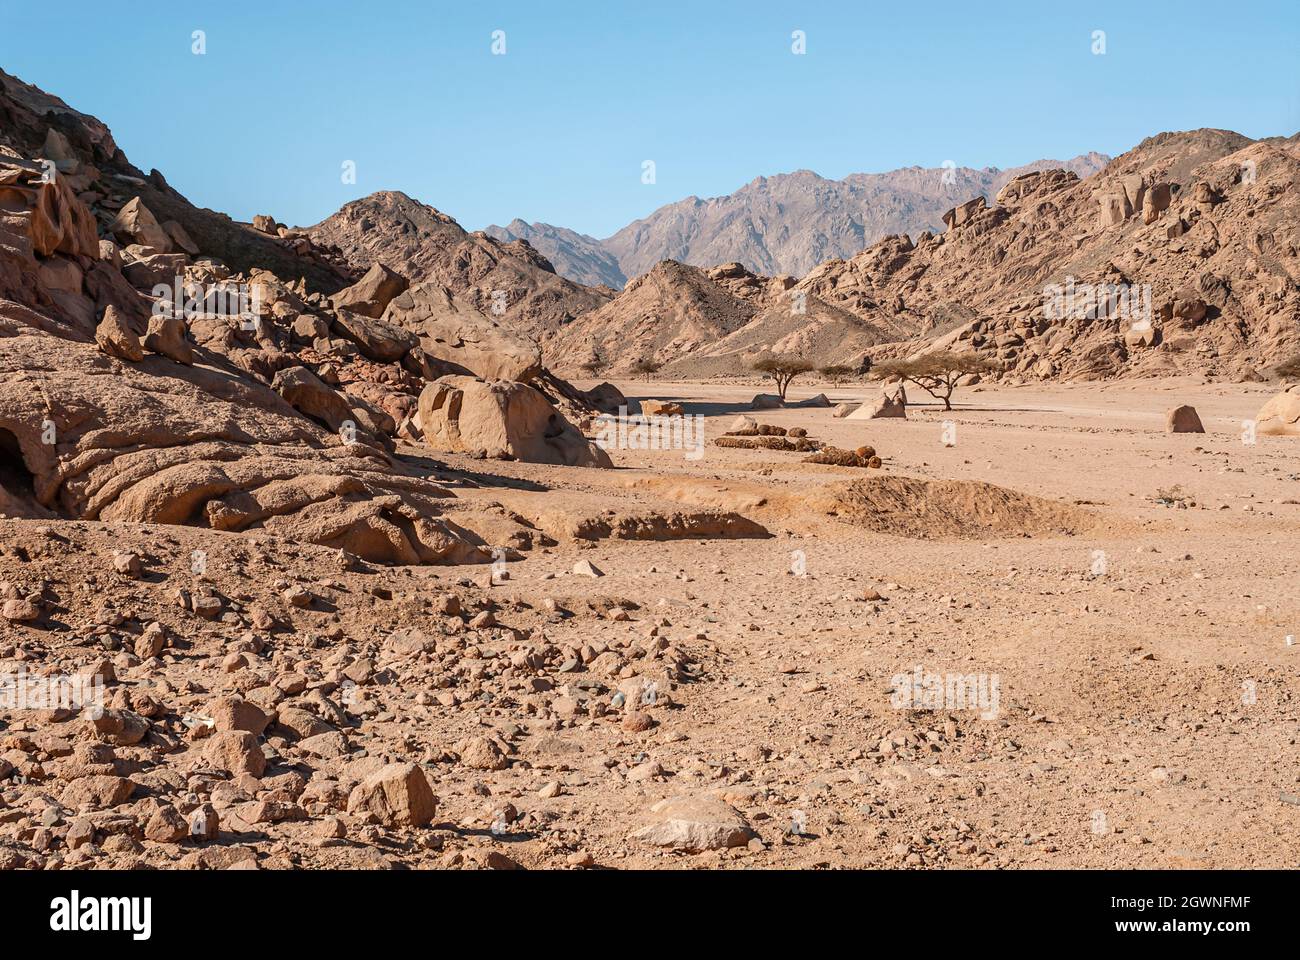 Remote landscape at the Sinai Desert near Sharm el Sheik, Egypt Stock Photo